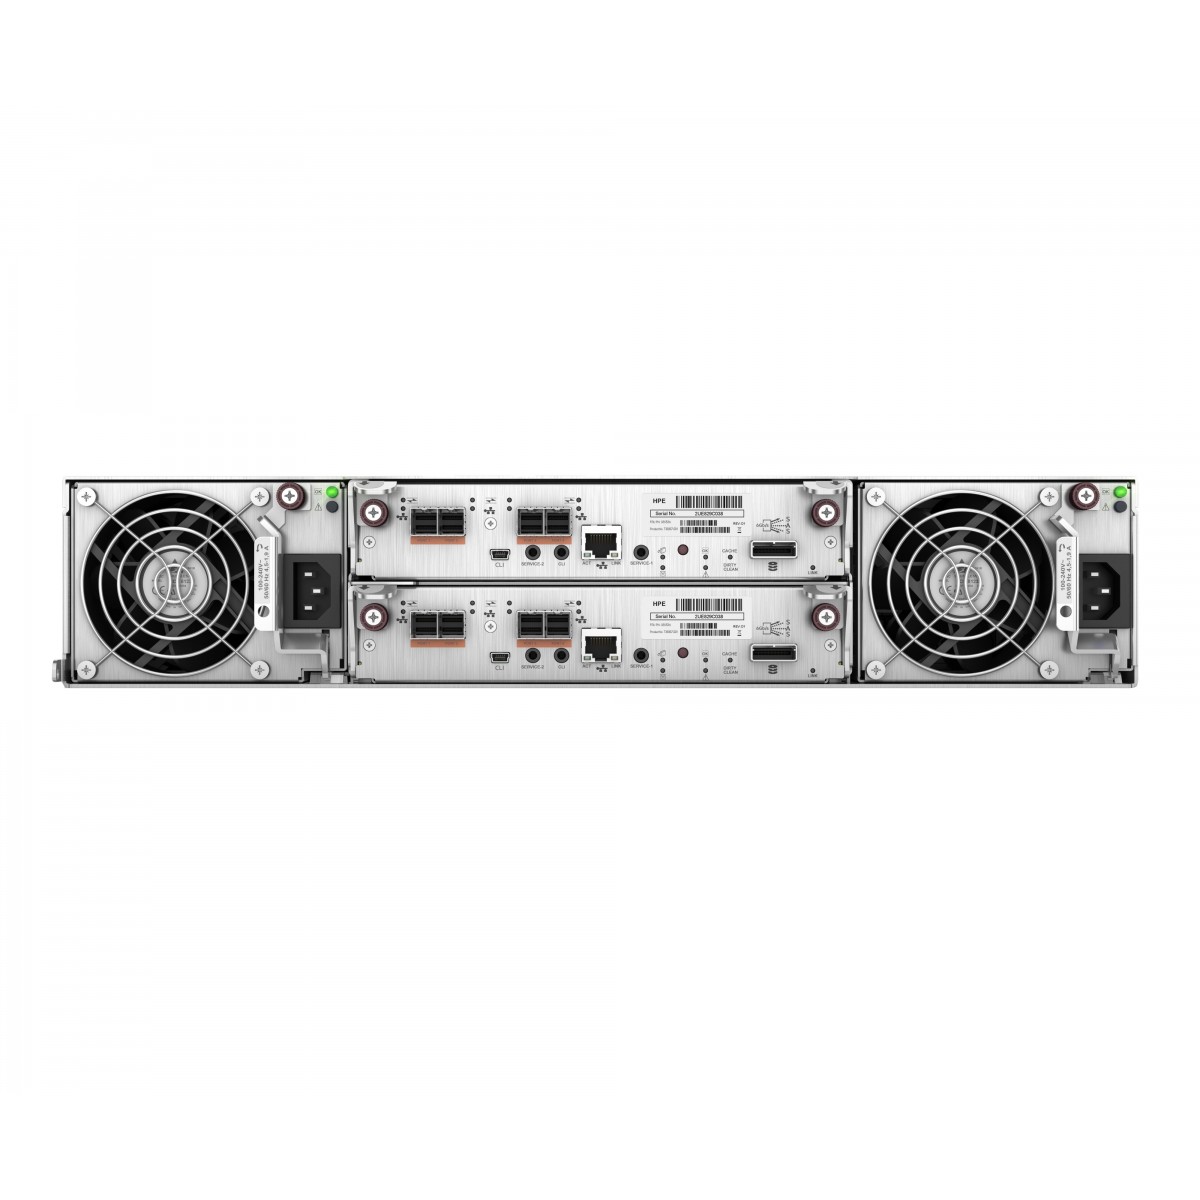 1050 DAS Storage System - 2U - Rack - 12x HDD - 120TB Supported Capacity - 2 x 12Gb/s SAS Controller